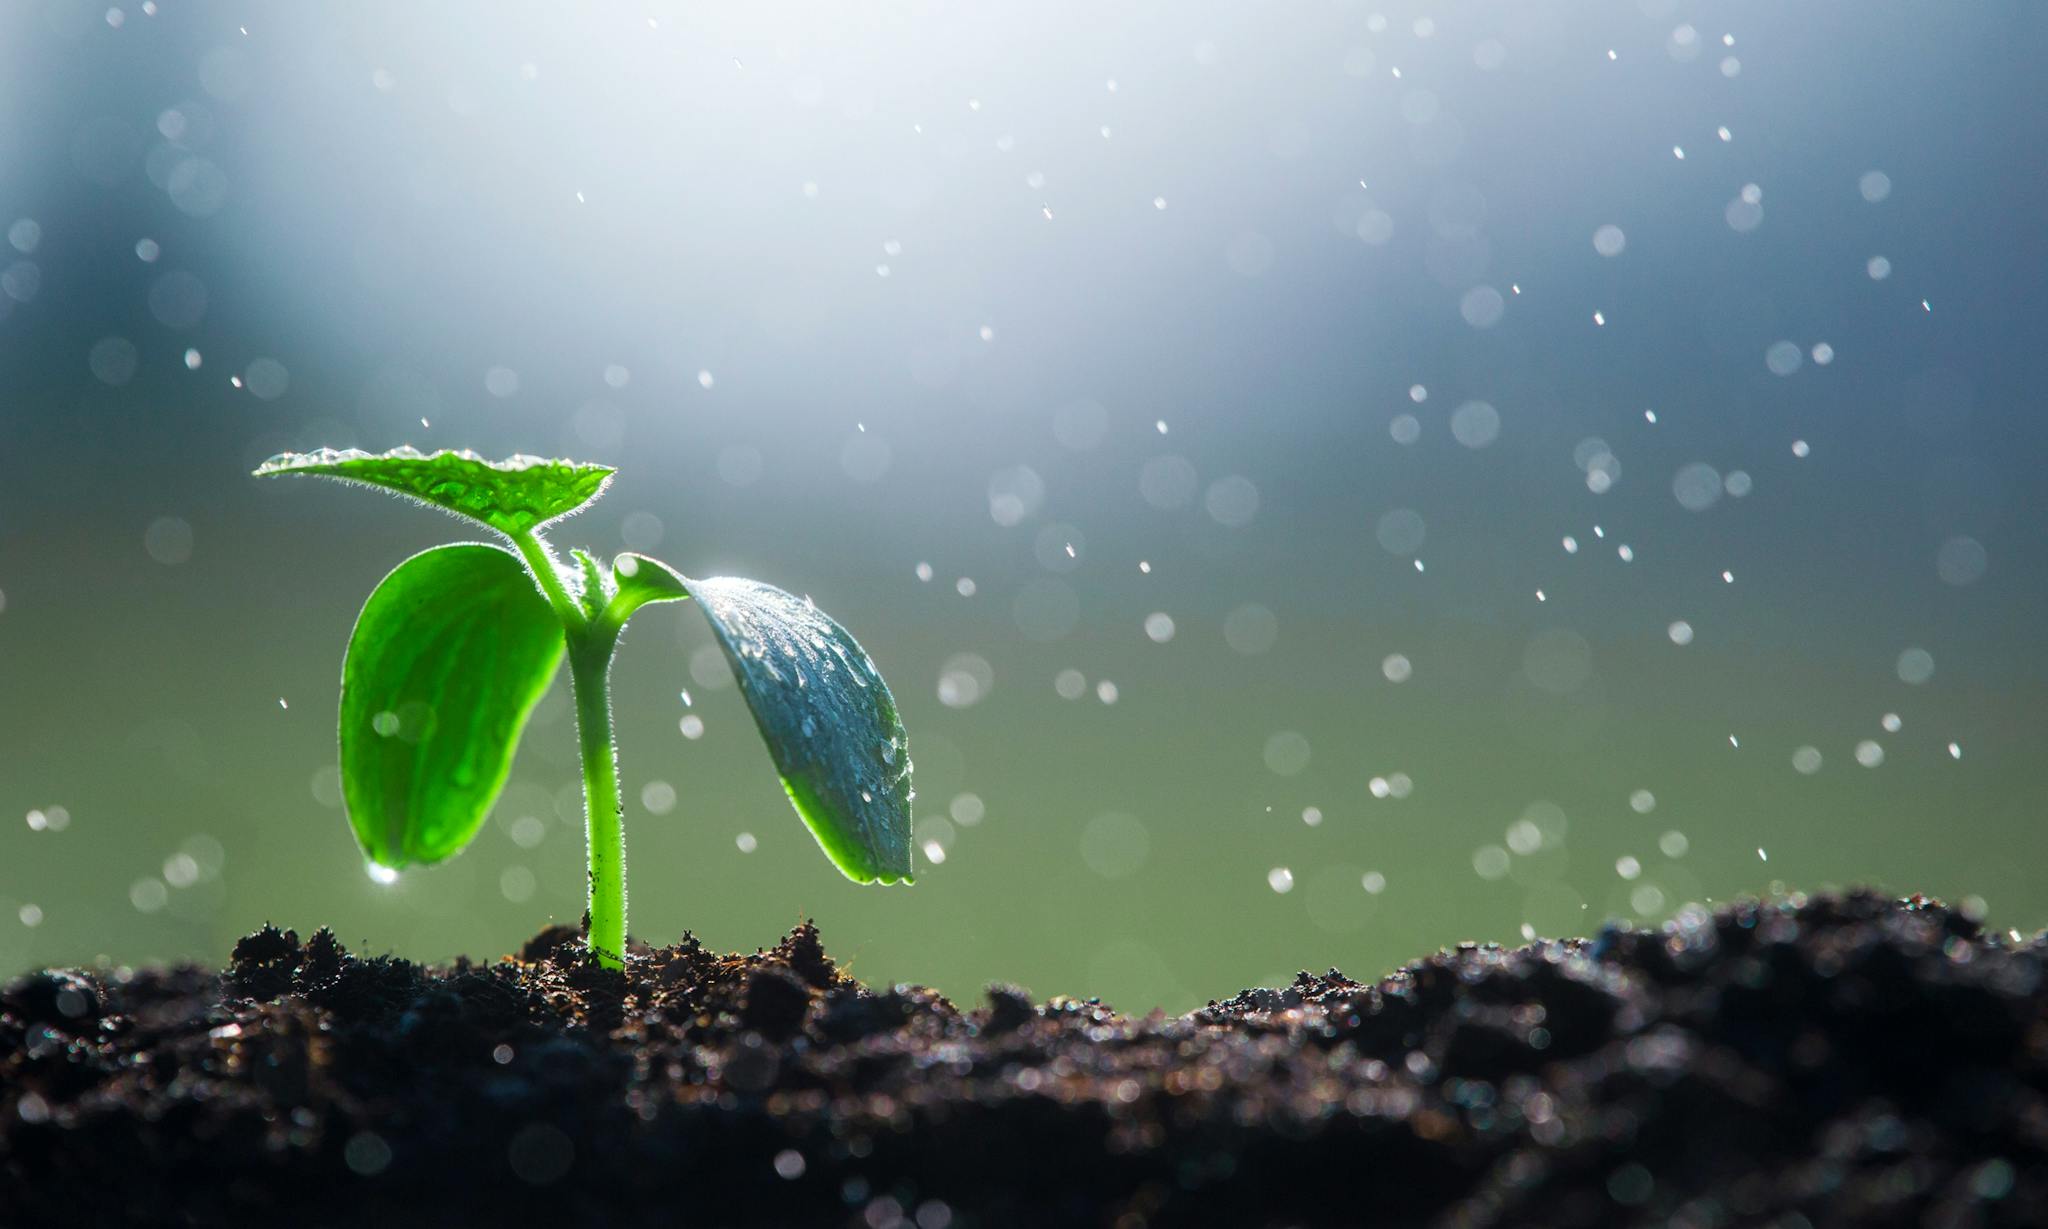 seedling growing in dirt in light rain with light overhead